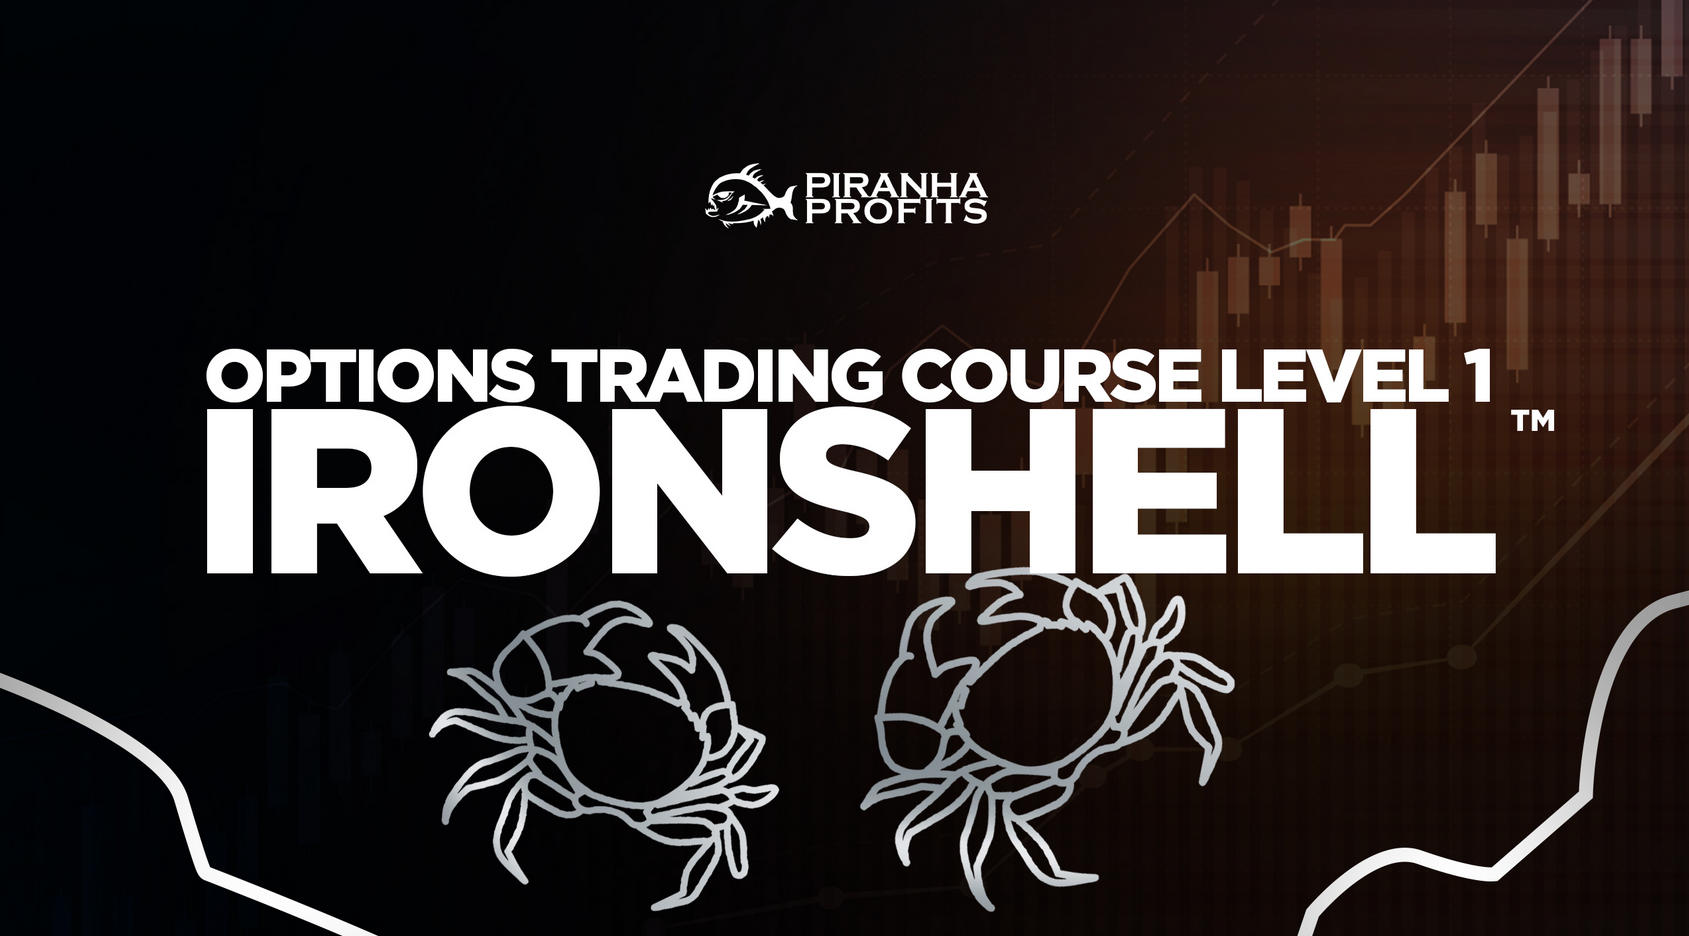 Adam Khoo - Options Trading Course Level 1: Options Ironshell